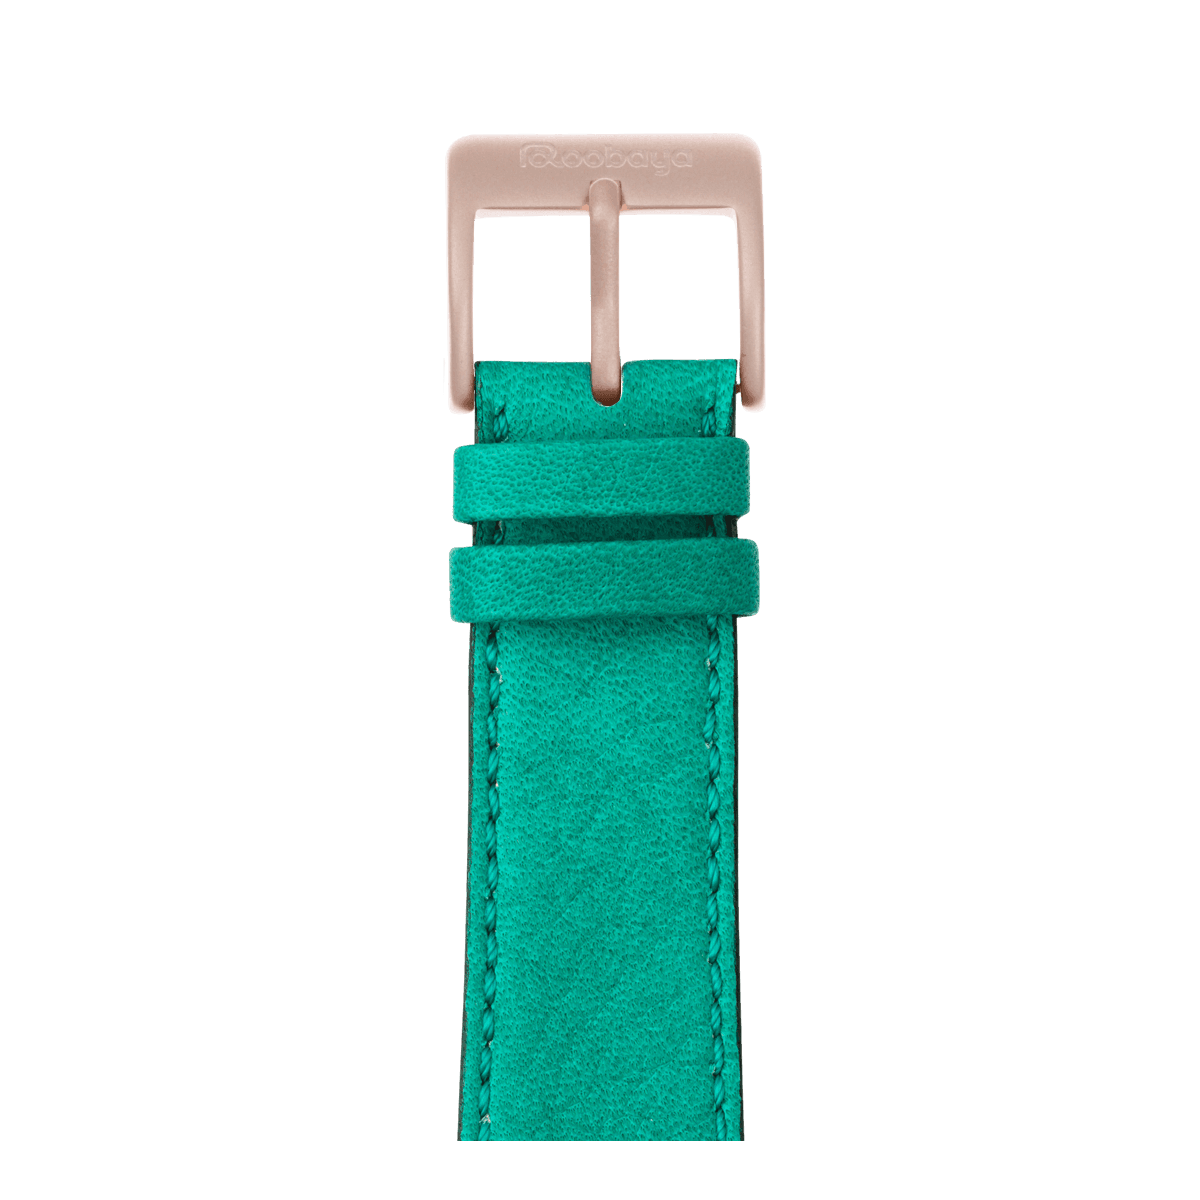 Sauvage Leder Armband in Türkis - bracebuds